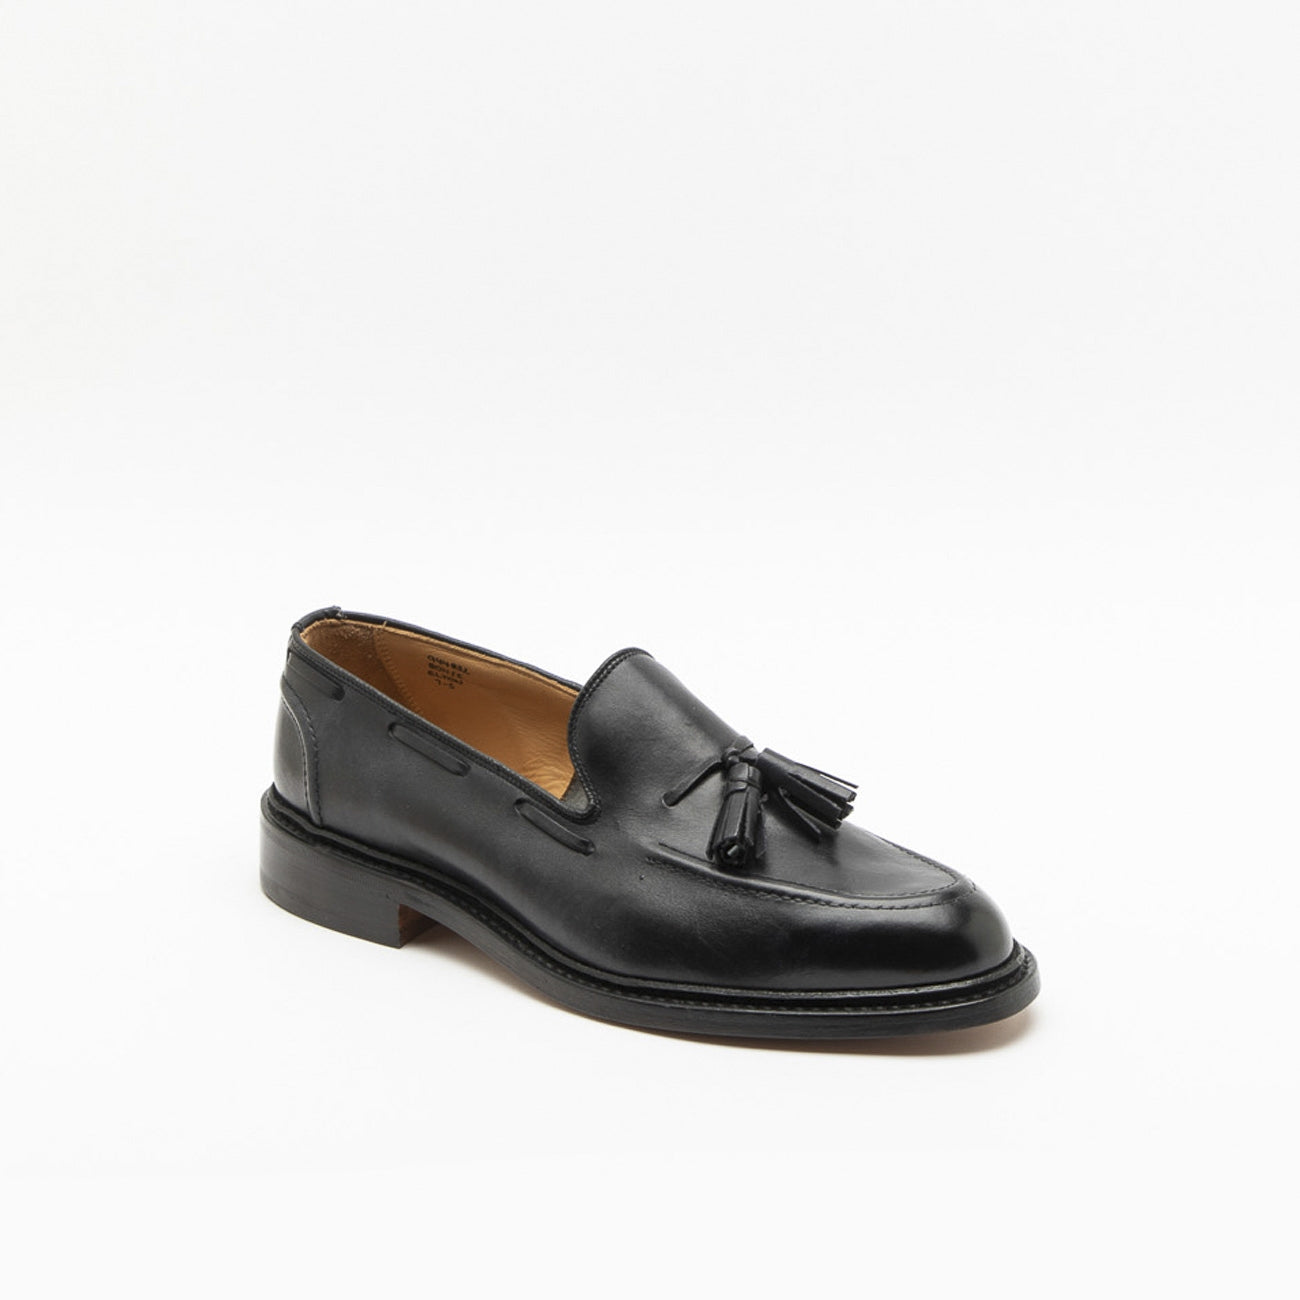 Tricker's Elton black box calf tassels loafer (leather sole)